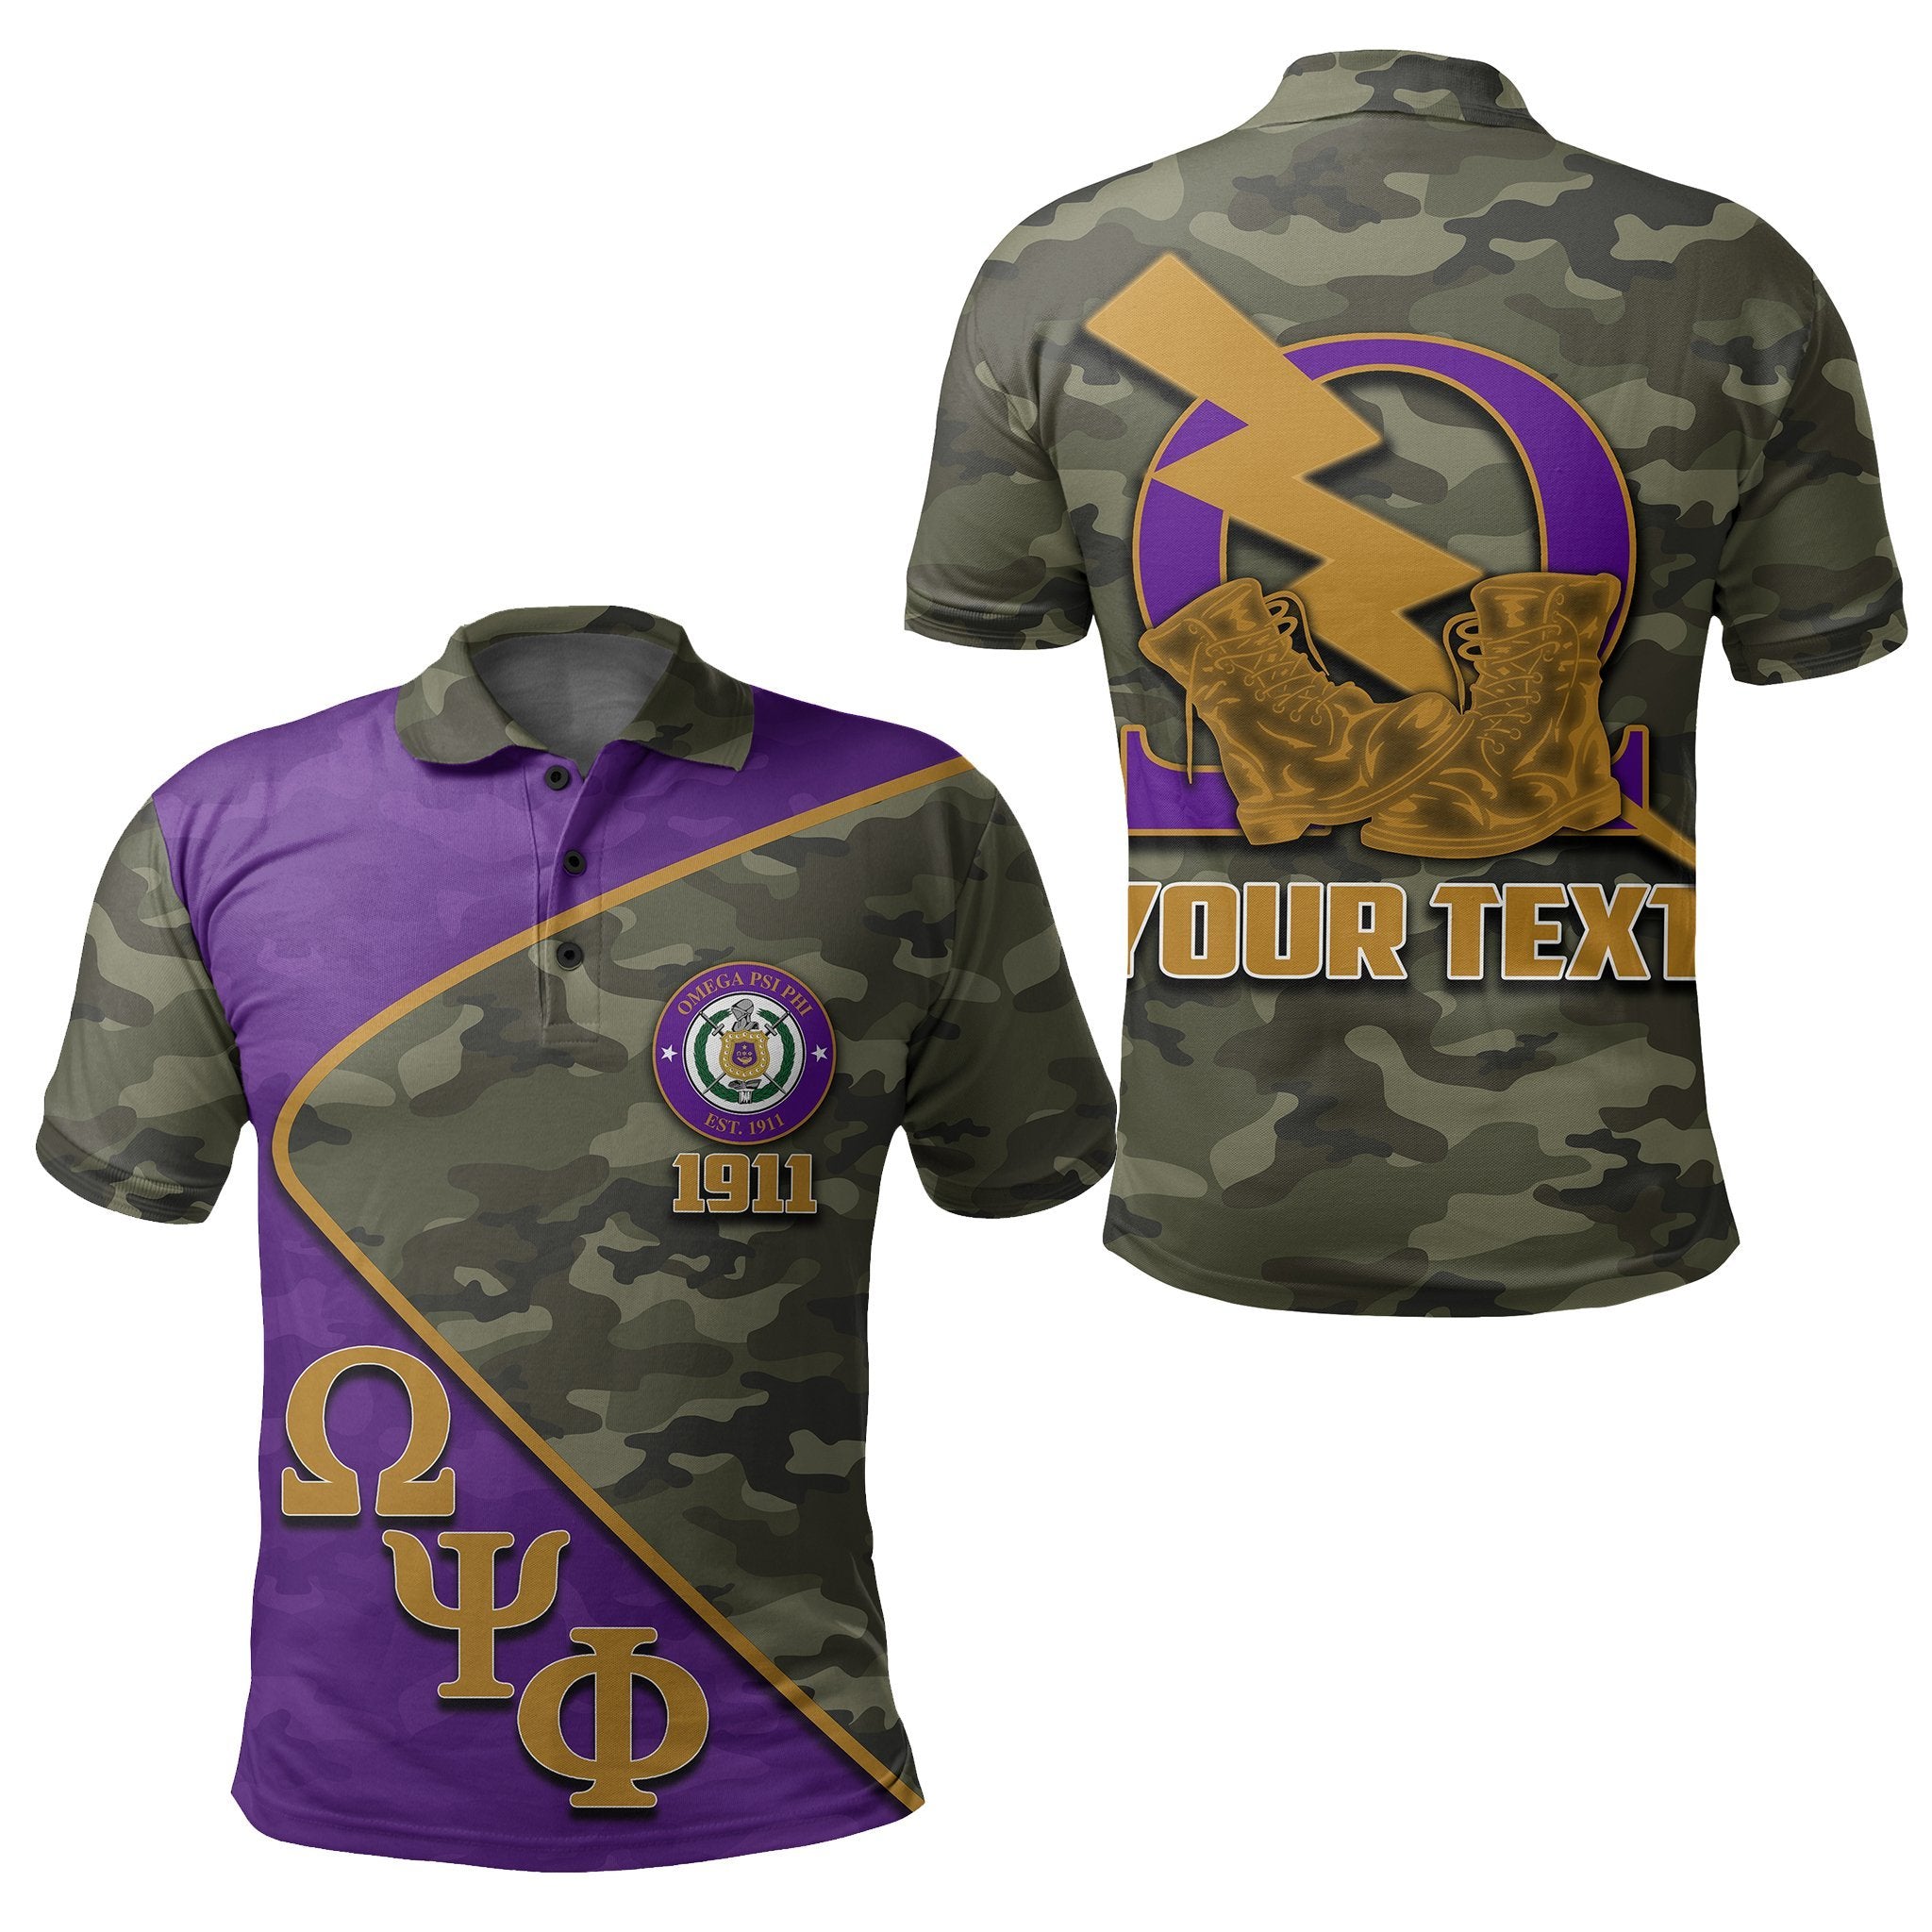 (Custom Personalised)Greek Life Polo Shirt Omega Psi Phi Army Style Lt6